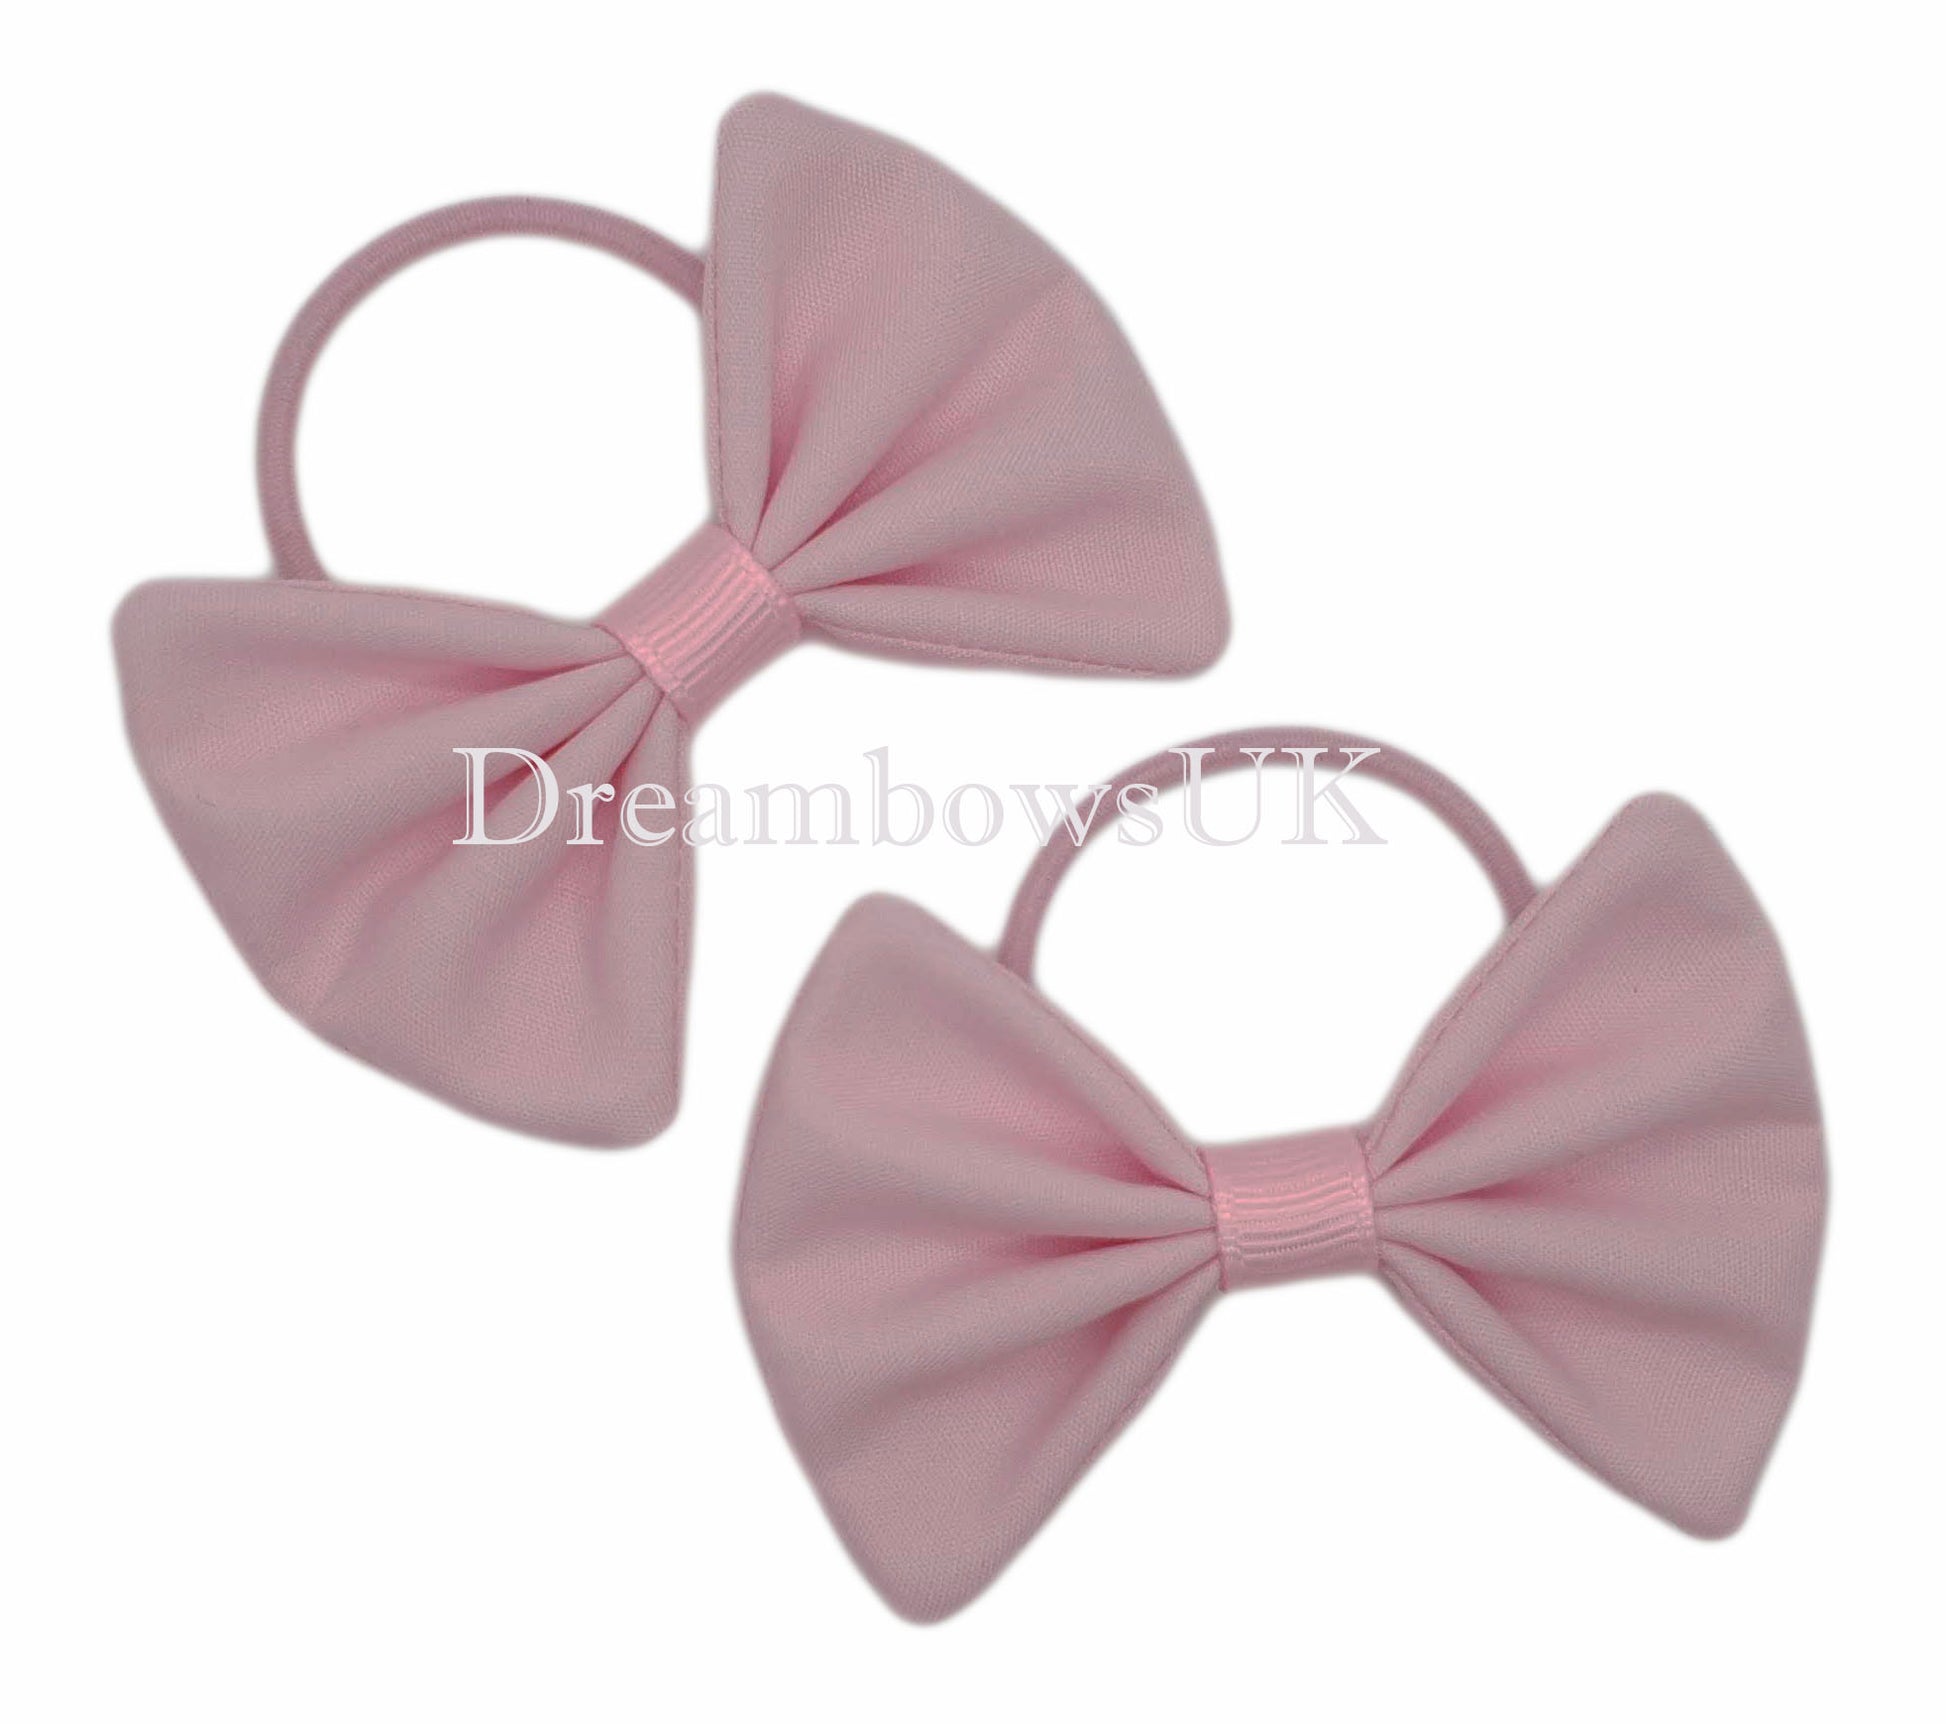 Girls baby pink fabric hair bows on thin hair ties